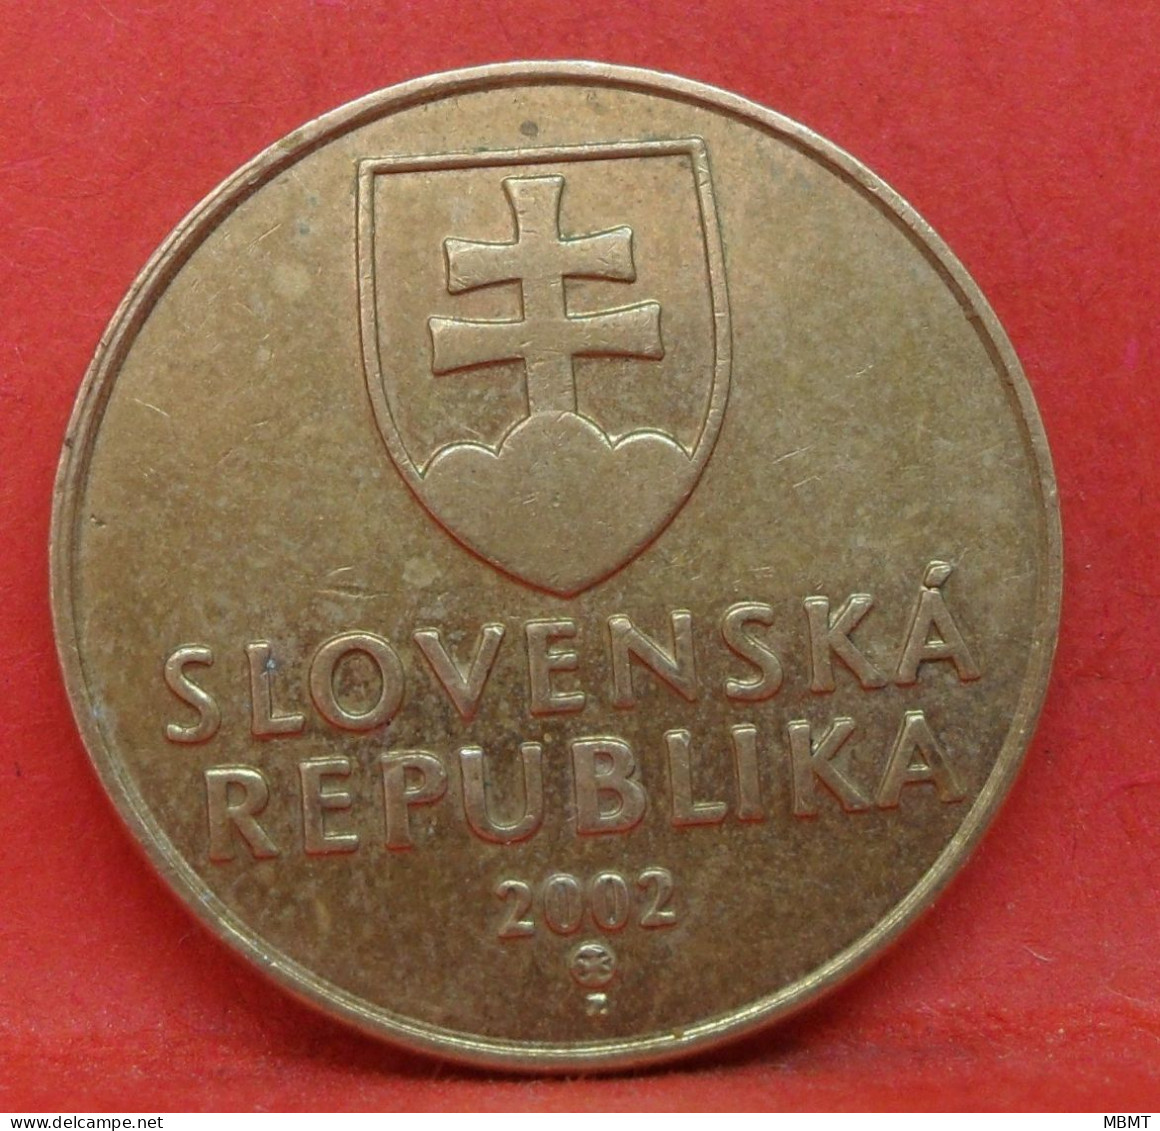 1 Koruna 2002 - TTB - Pièce De Monnaie Slovaquie - Article N°4668 - Slowakei